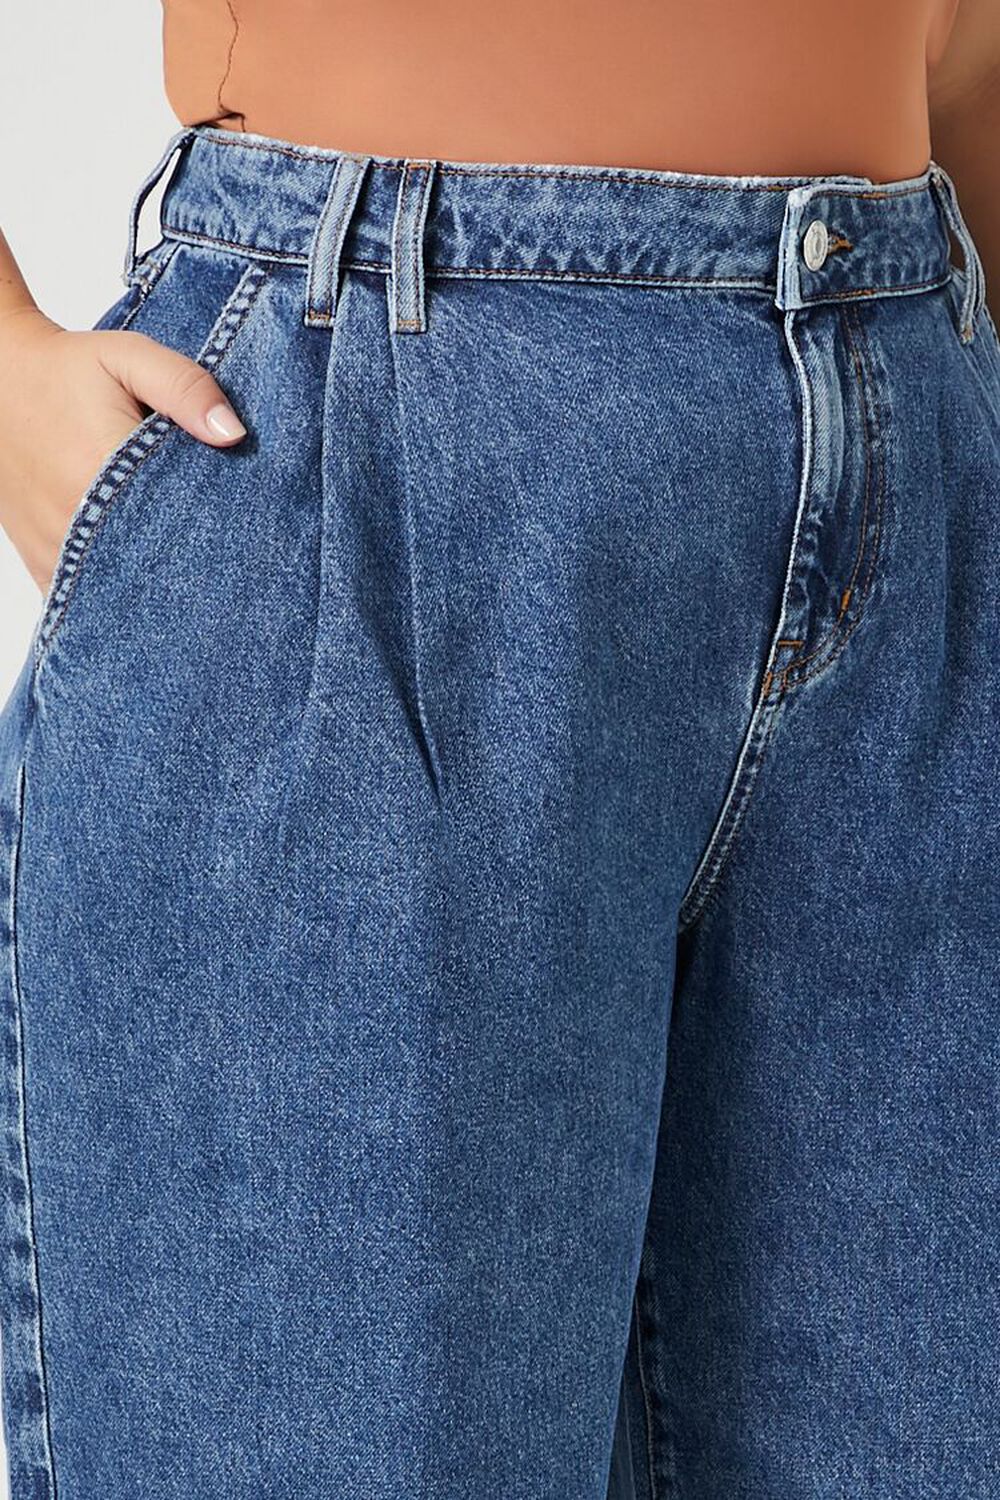 Tummy-Control Jeans for Women's High Waist High Elastic Pleated